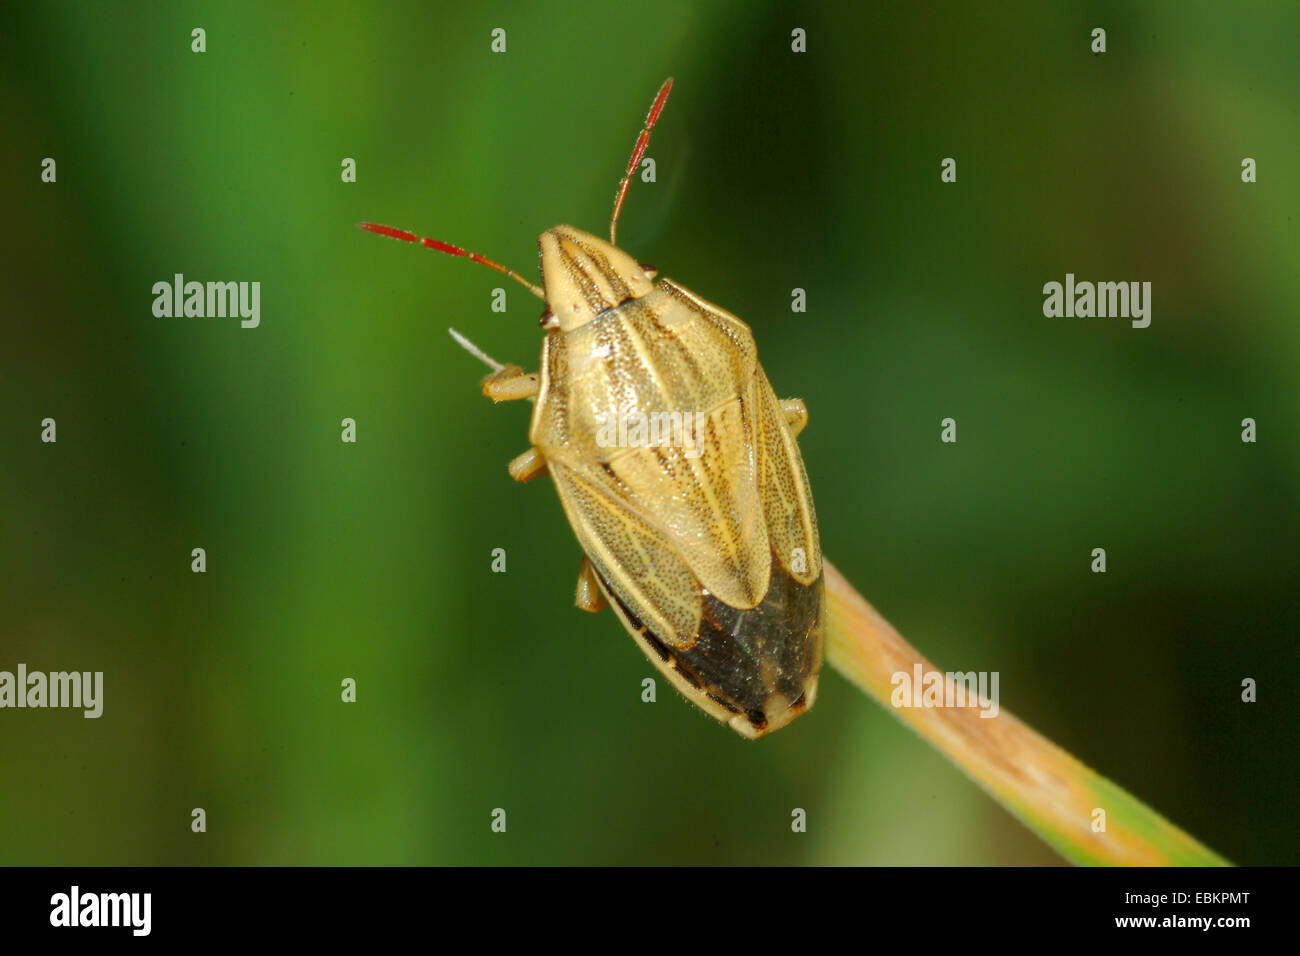 Bishop's mitre, Bishop's mitre bug (Aelia acuminata), sitting on a grass blade, Germany Stock Photo